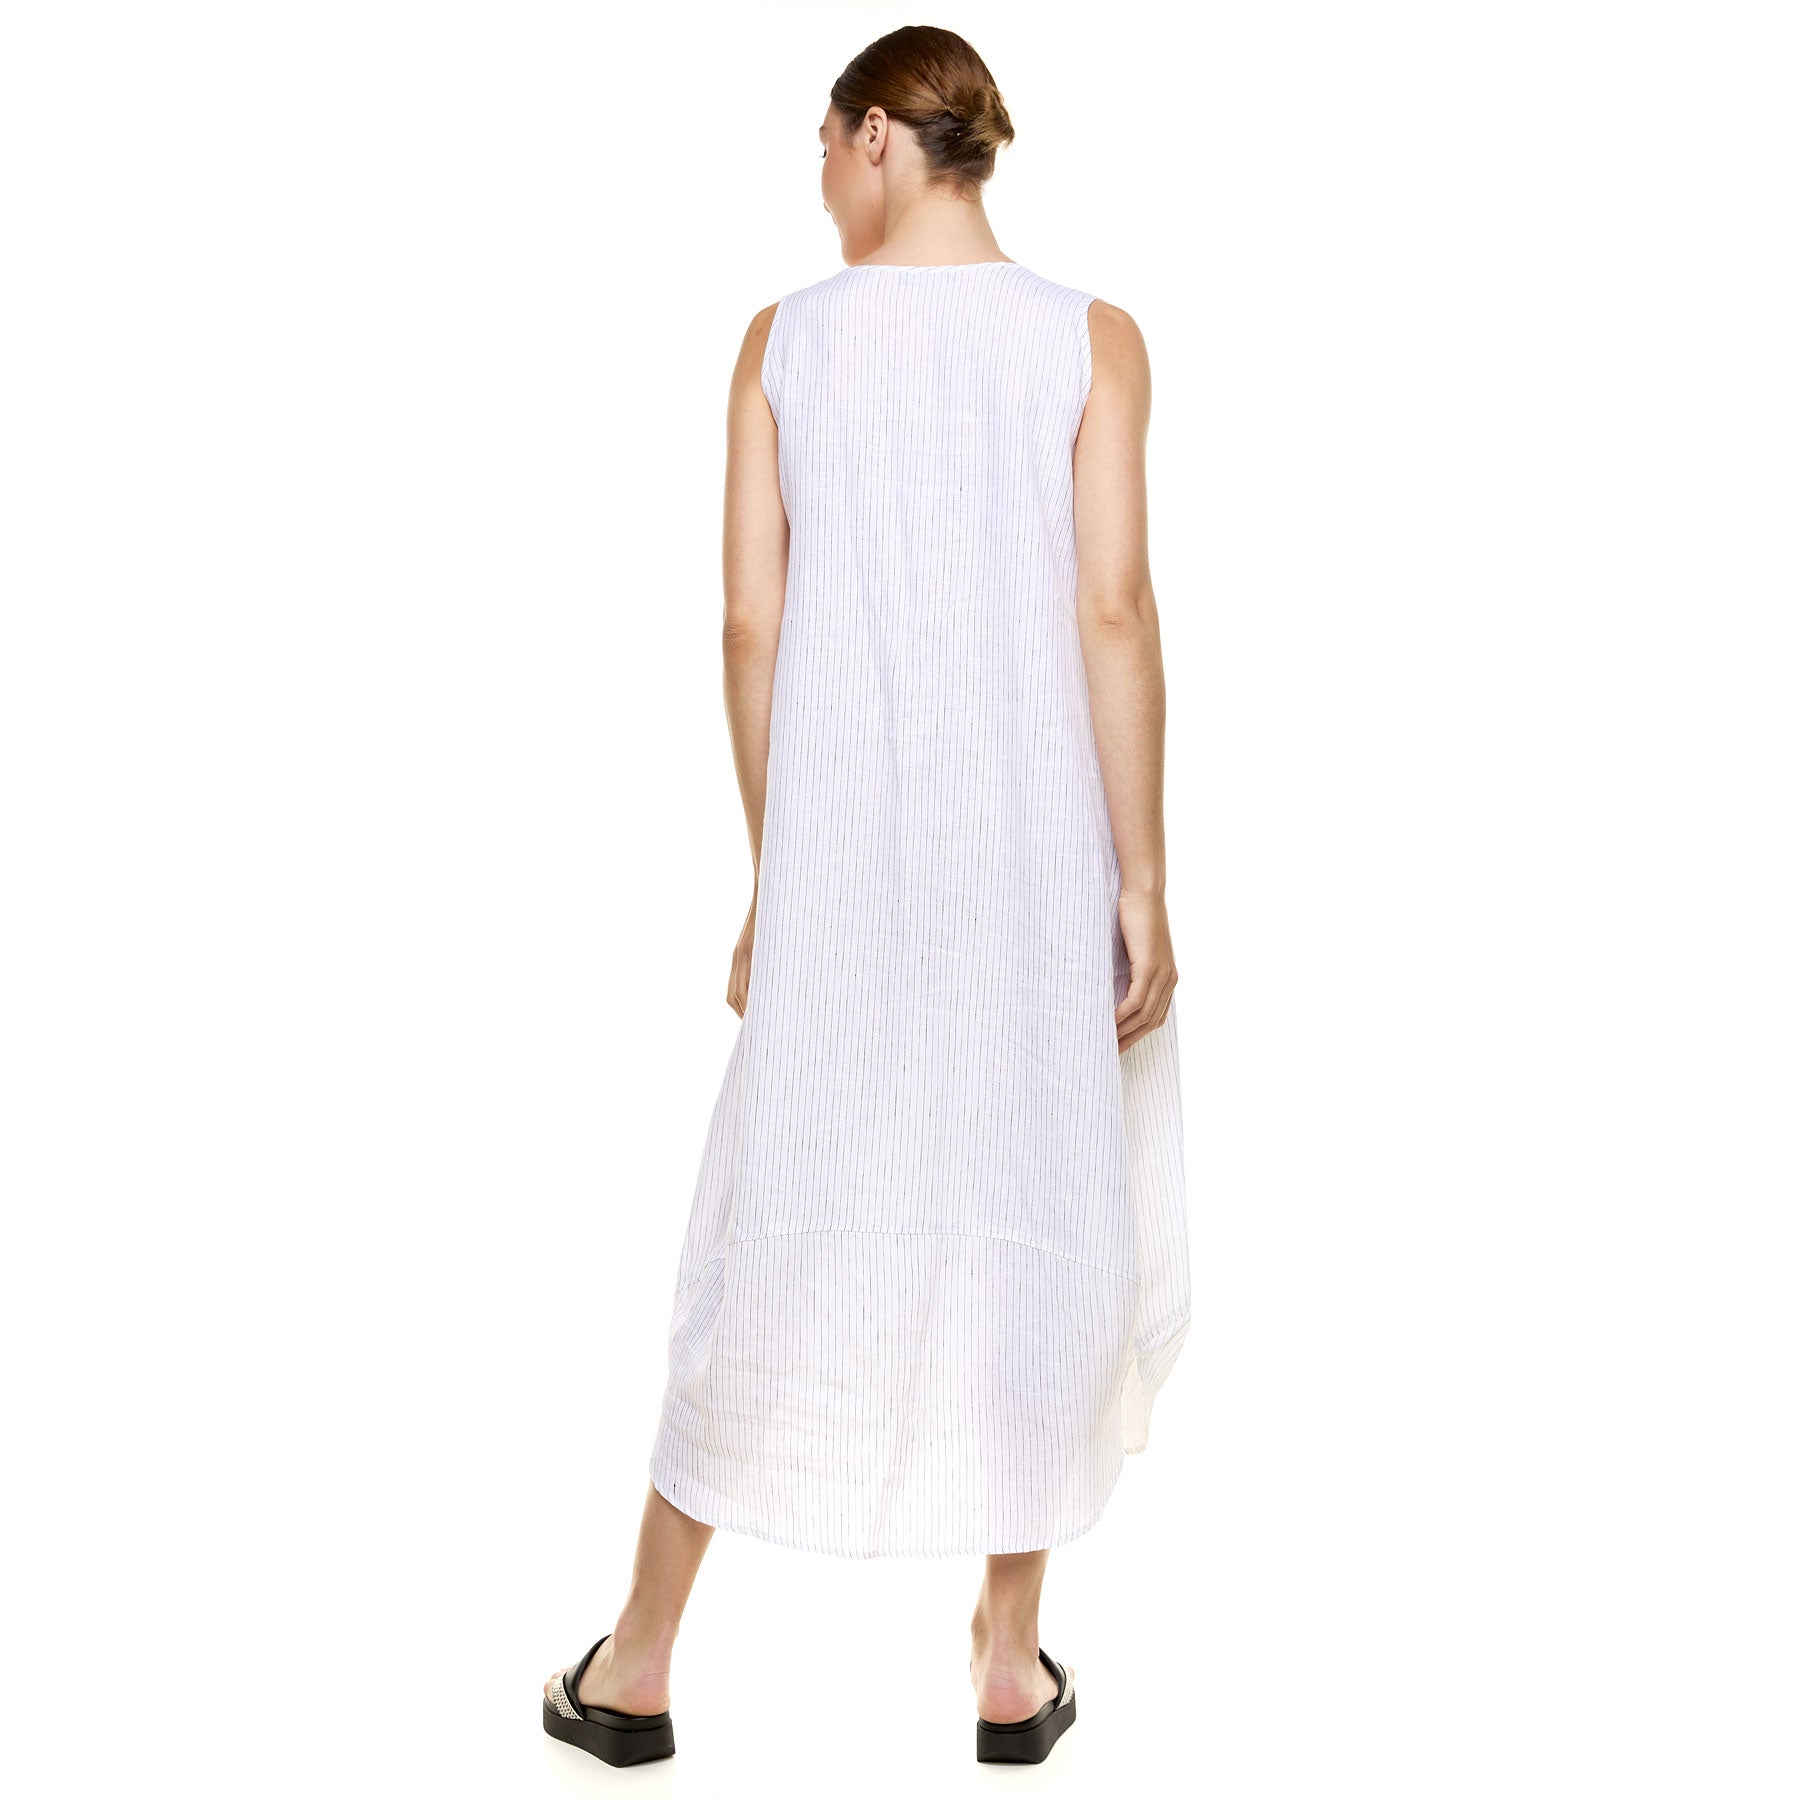 Chic & Simple Antigone Sleeveless Dress - White with Fine Stripe